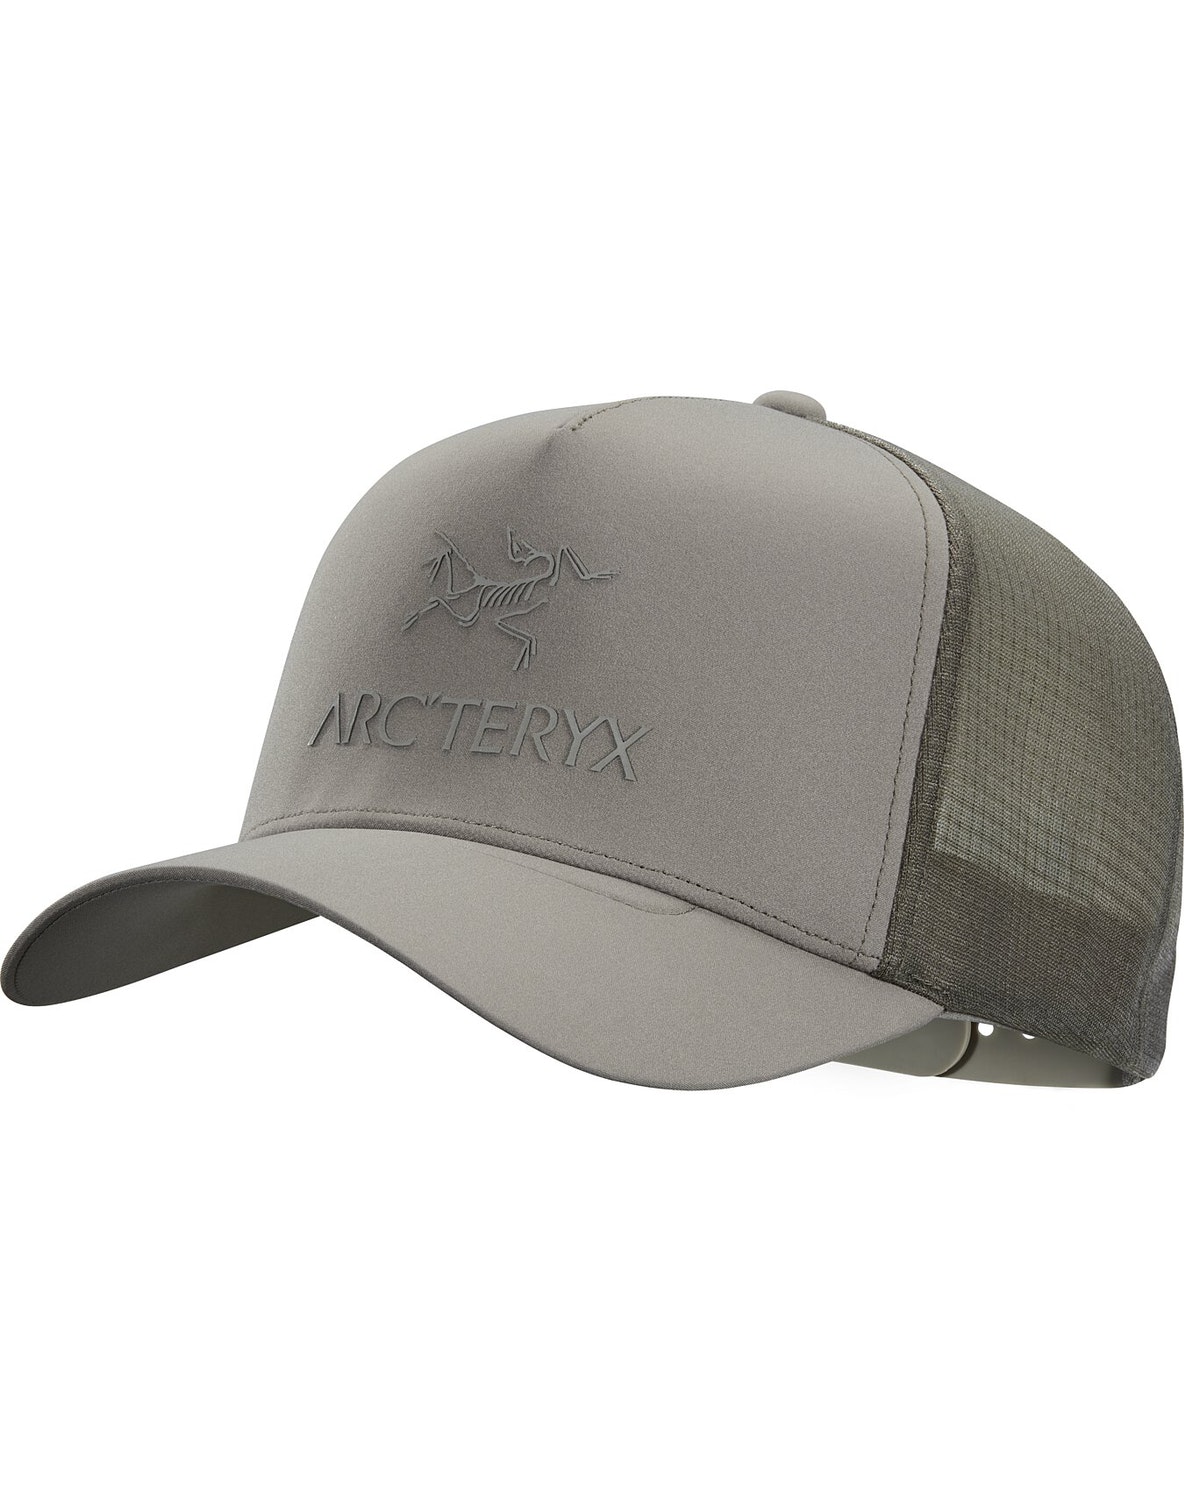 Hats Arc'teryx Logo Donna Marroni Chiaro - IT-46537913